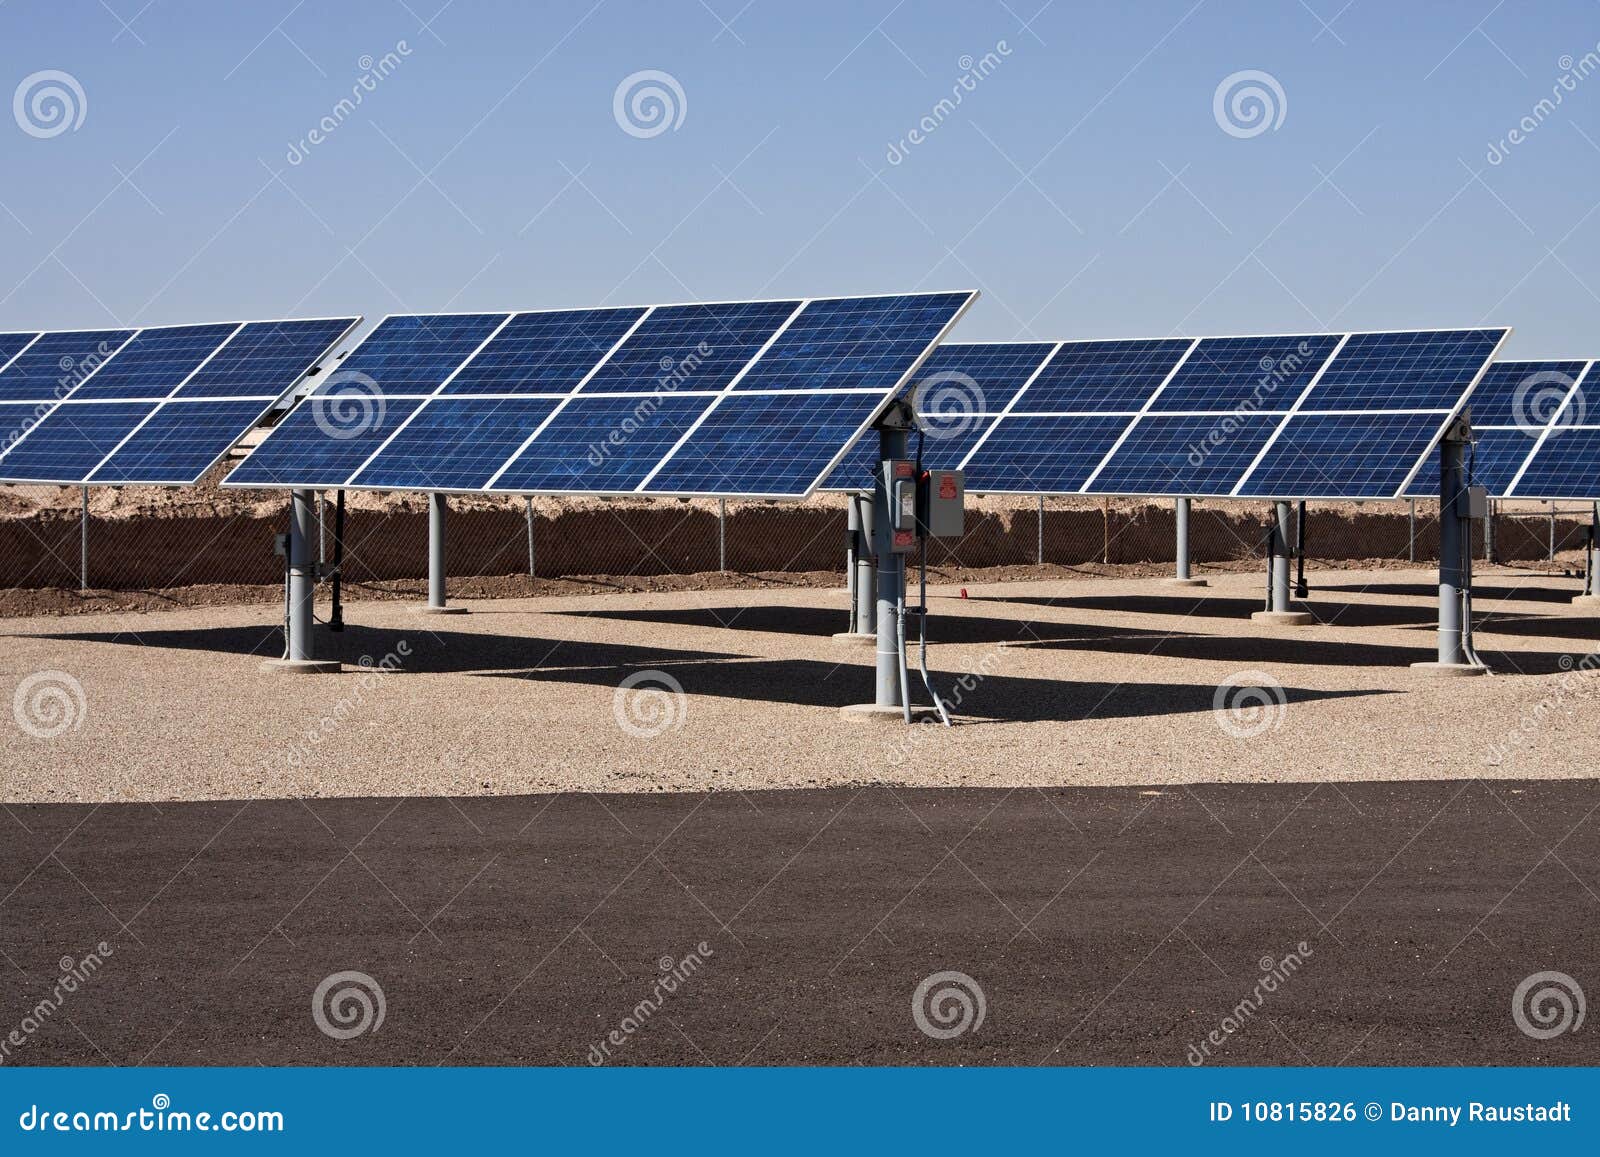 solar panel energy collector farm